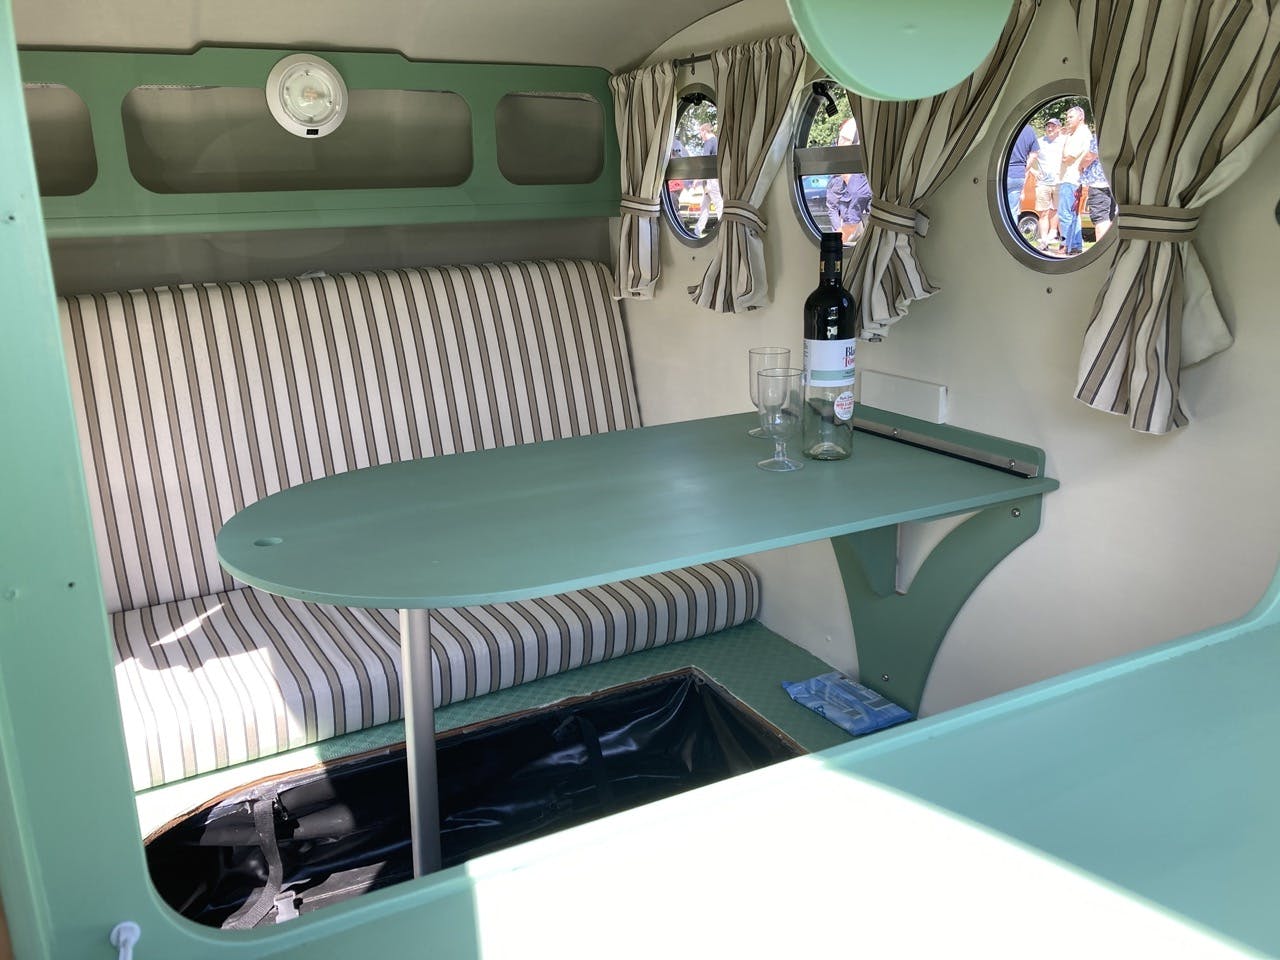 Saab 96 with camper interior